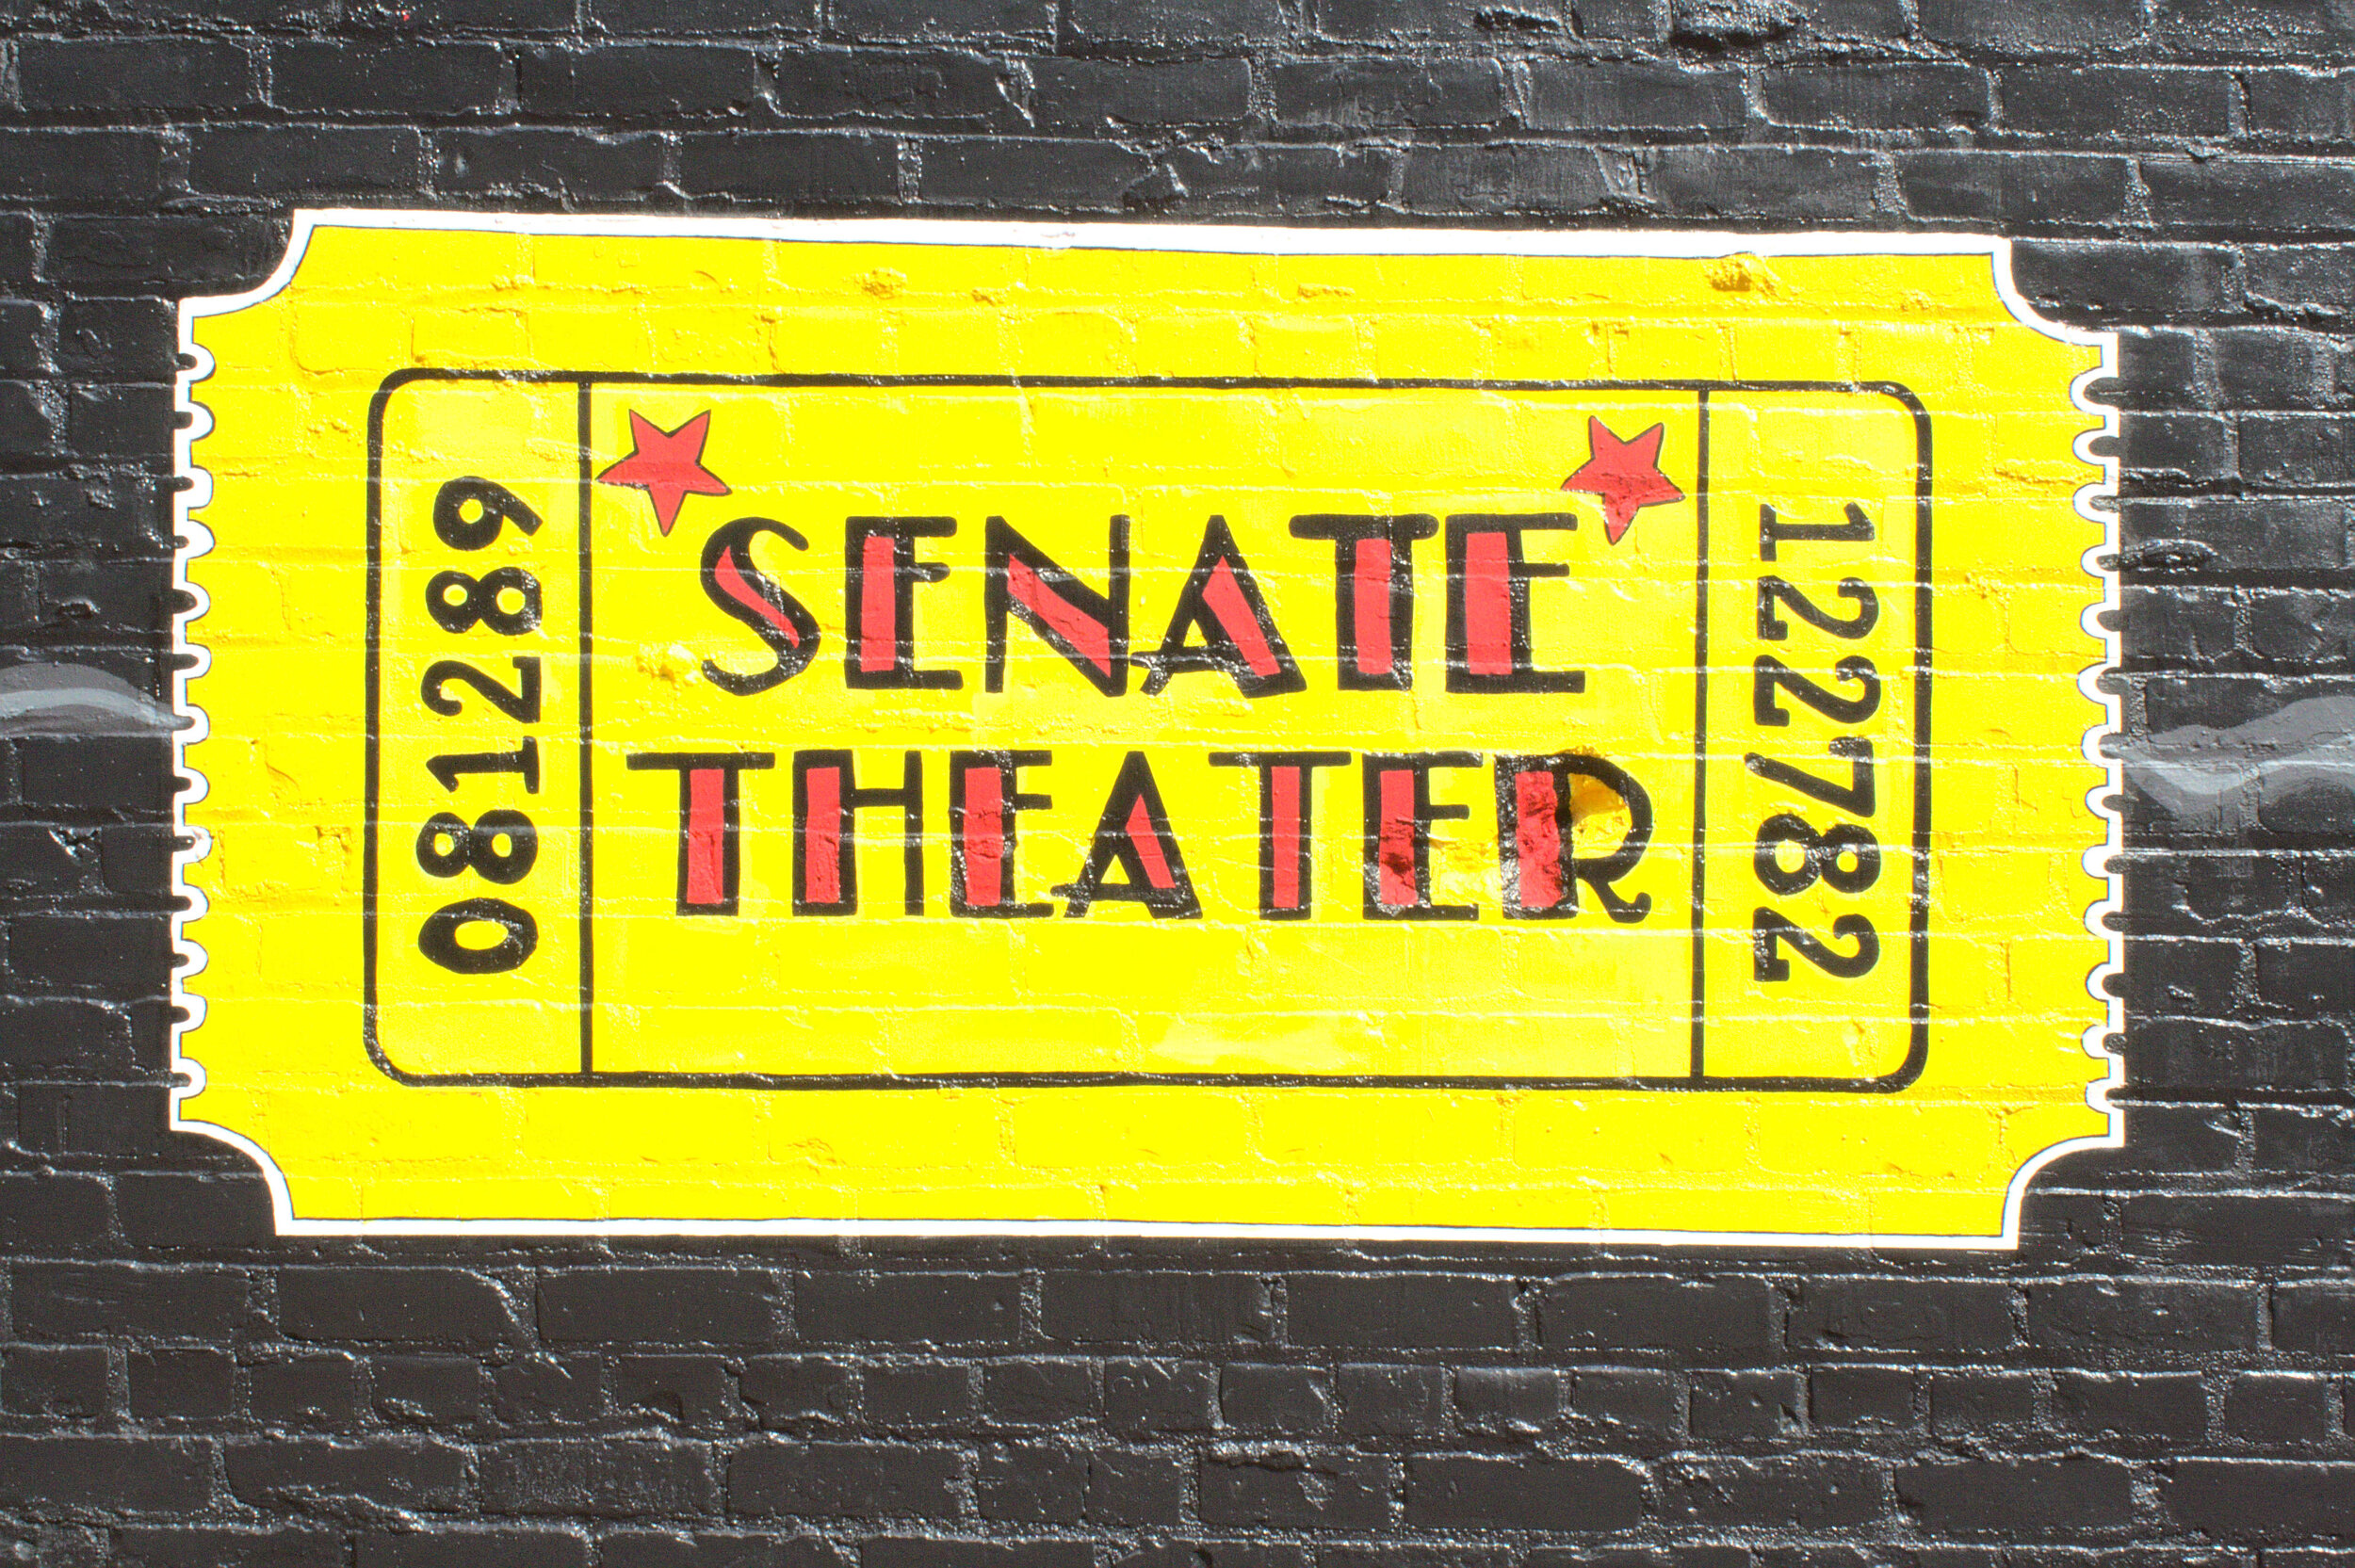 05 Blight Hernandez and Naye-Taye Visuals Paint The Senate Theater Movie Screen Mural